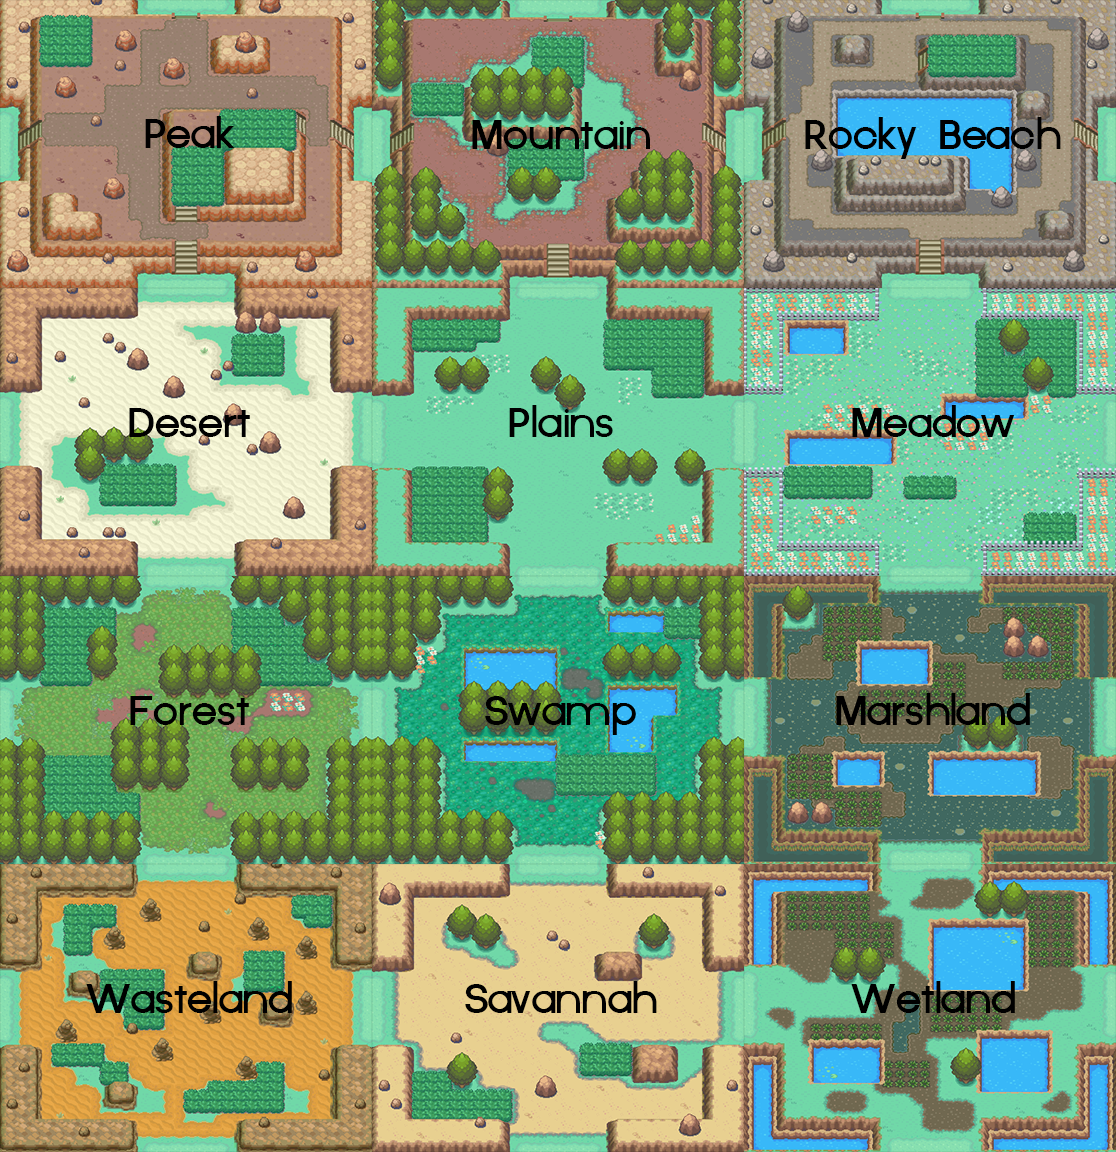 image-johto-safari-zone-layout-png-pokemon-planet-wikia-fandom